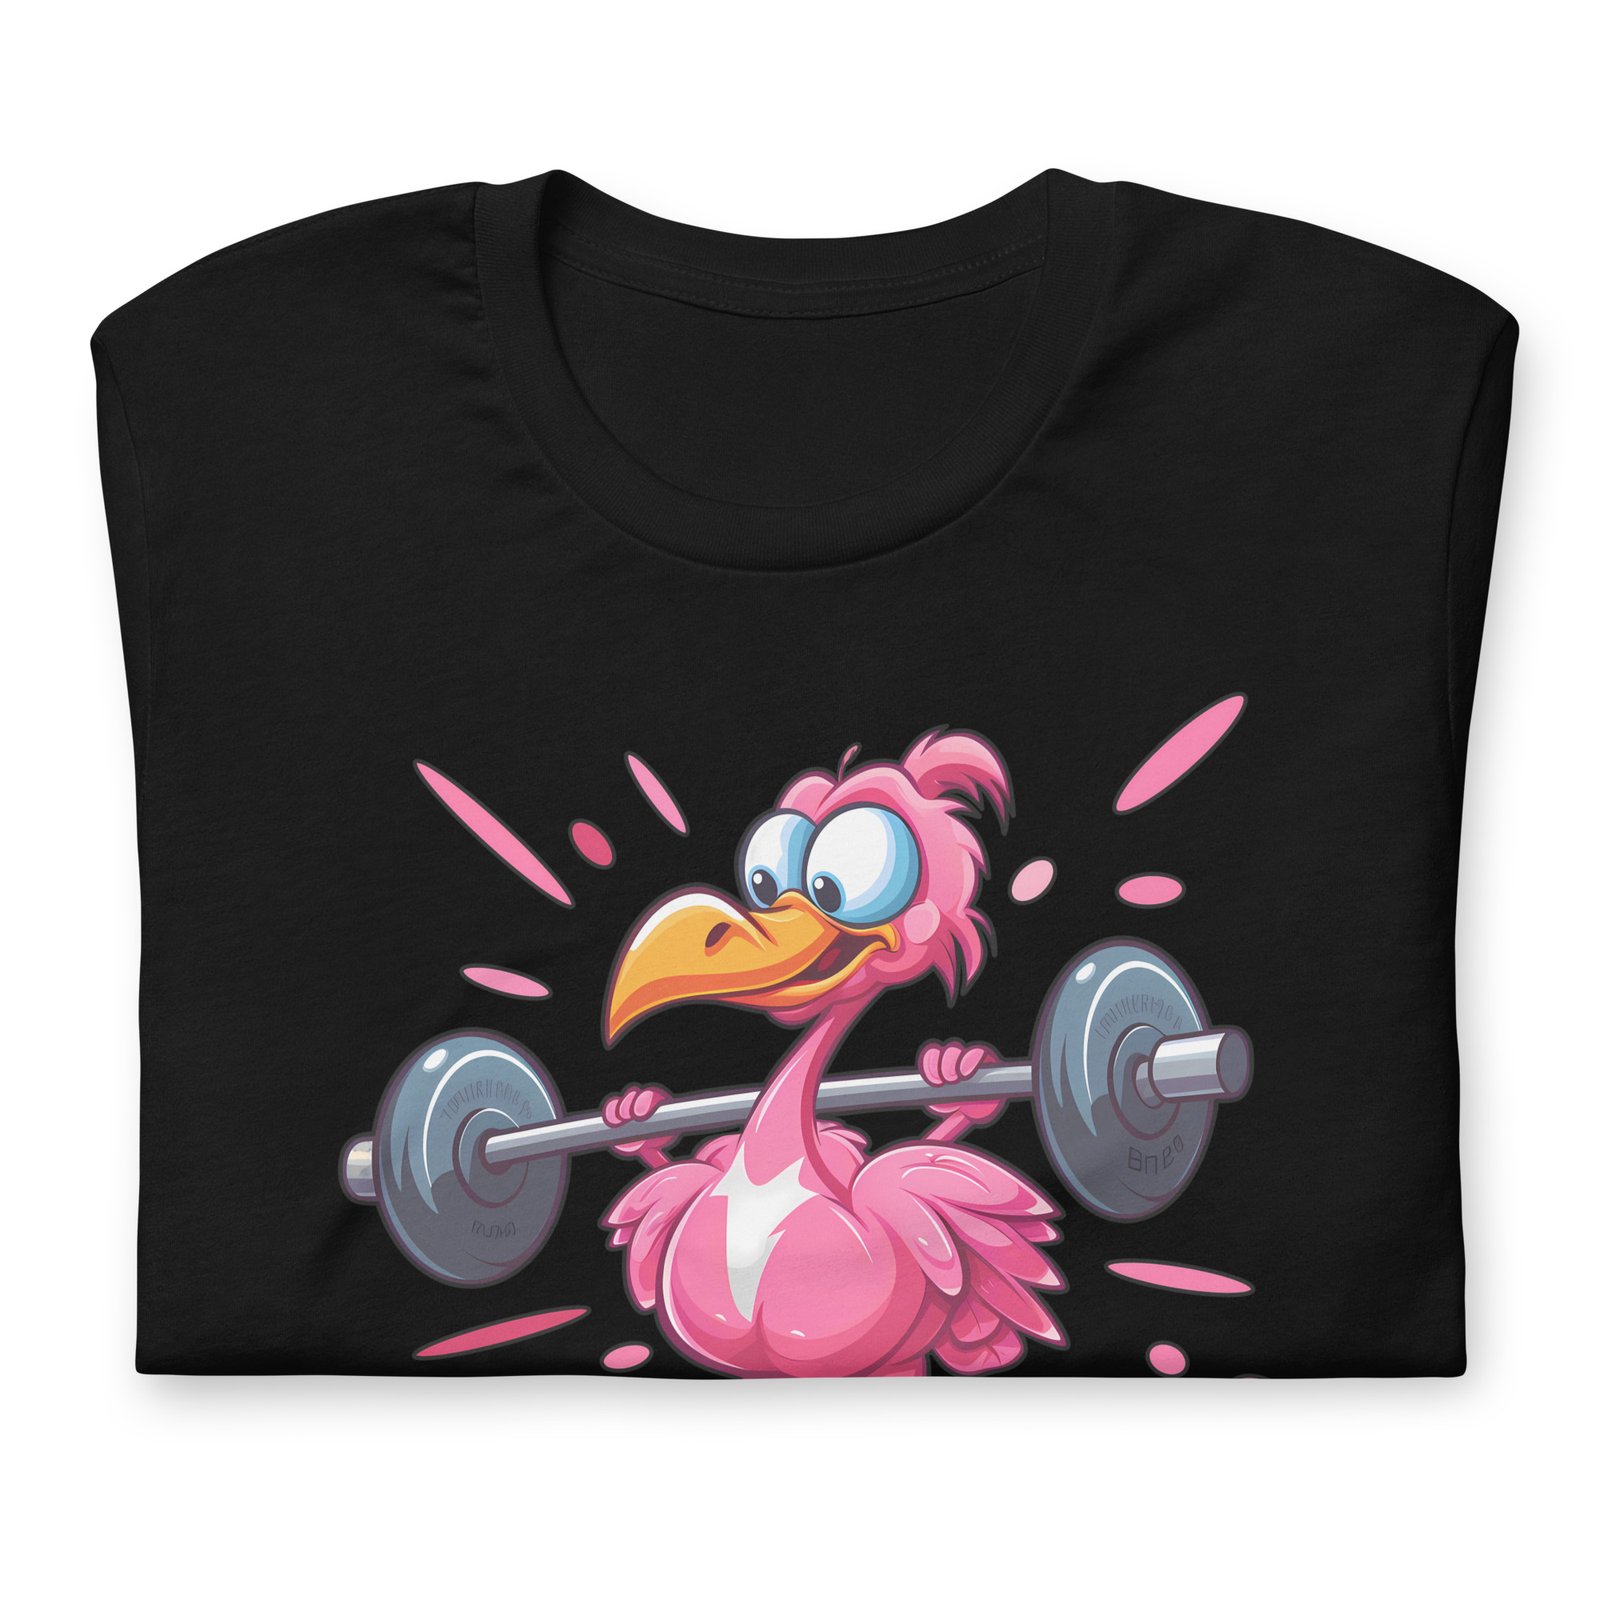 Funny Flamingo Workout T-shirt